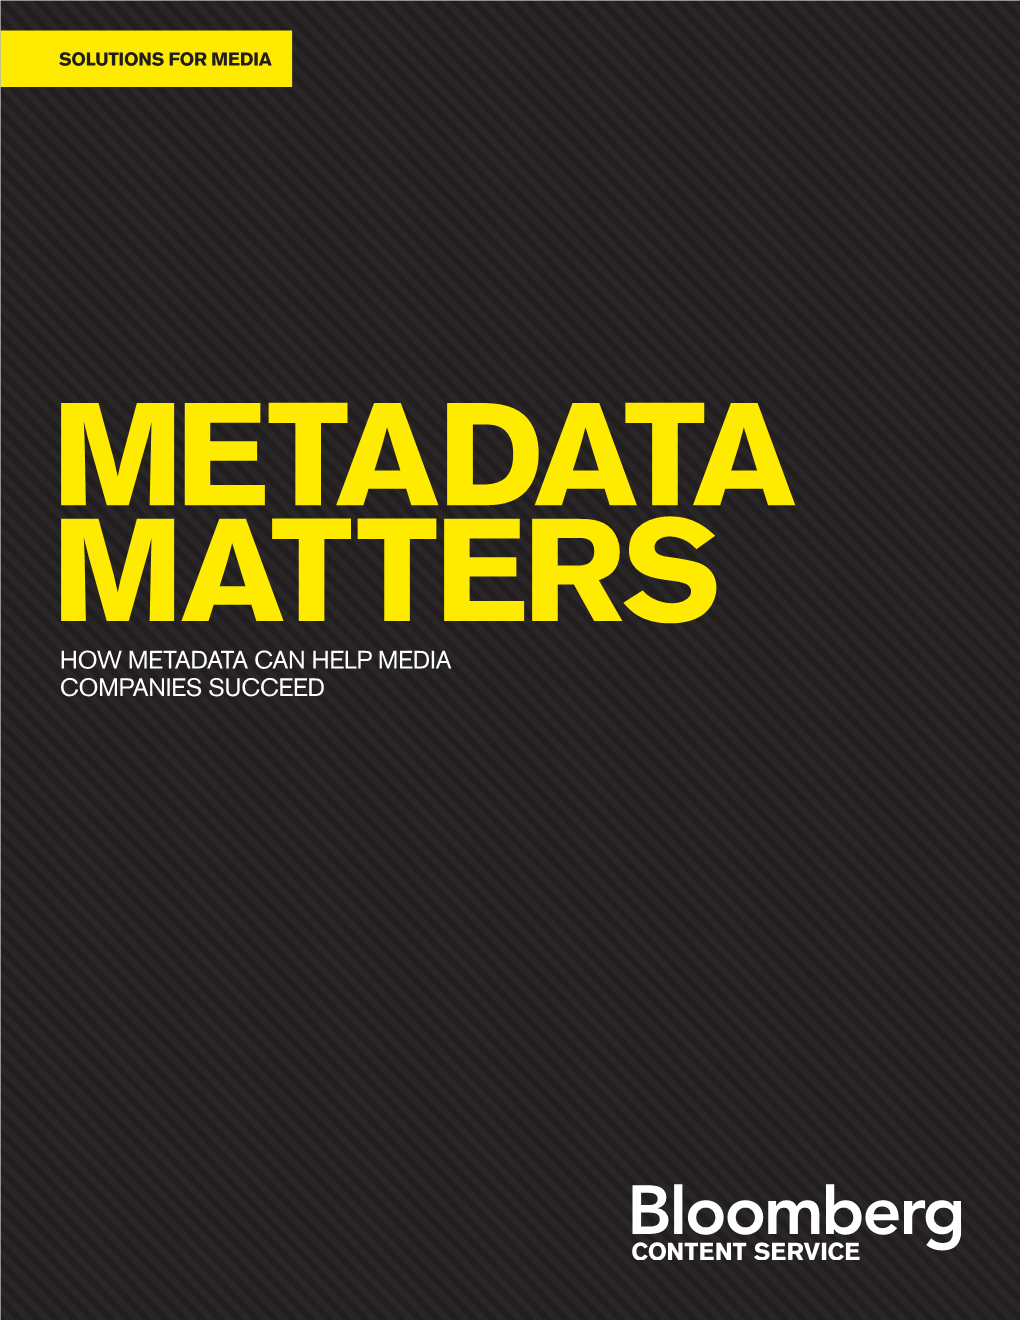 How Metadata Can Help Media Companies Succeed